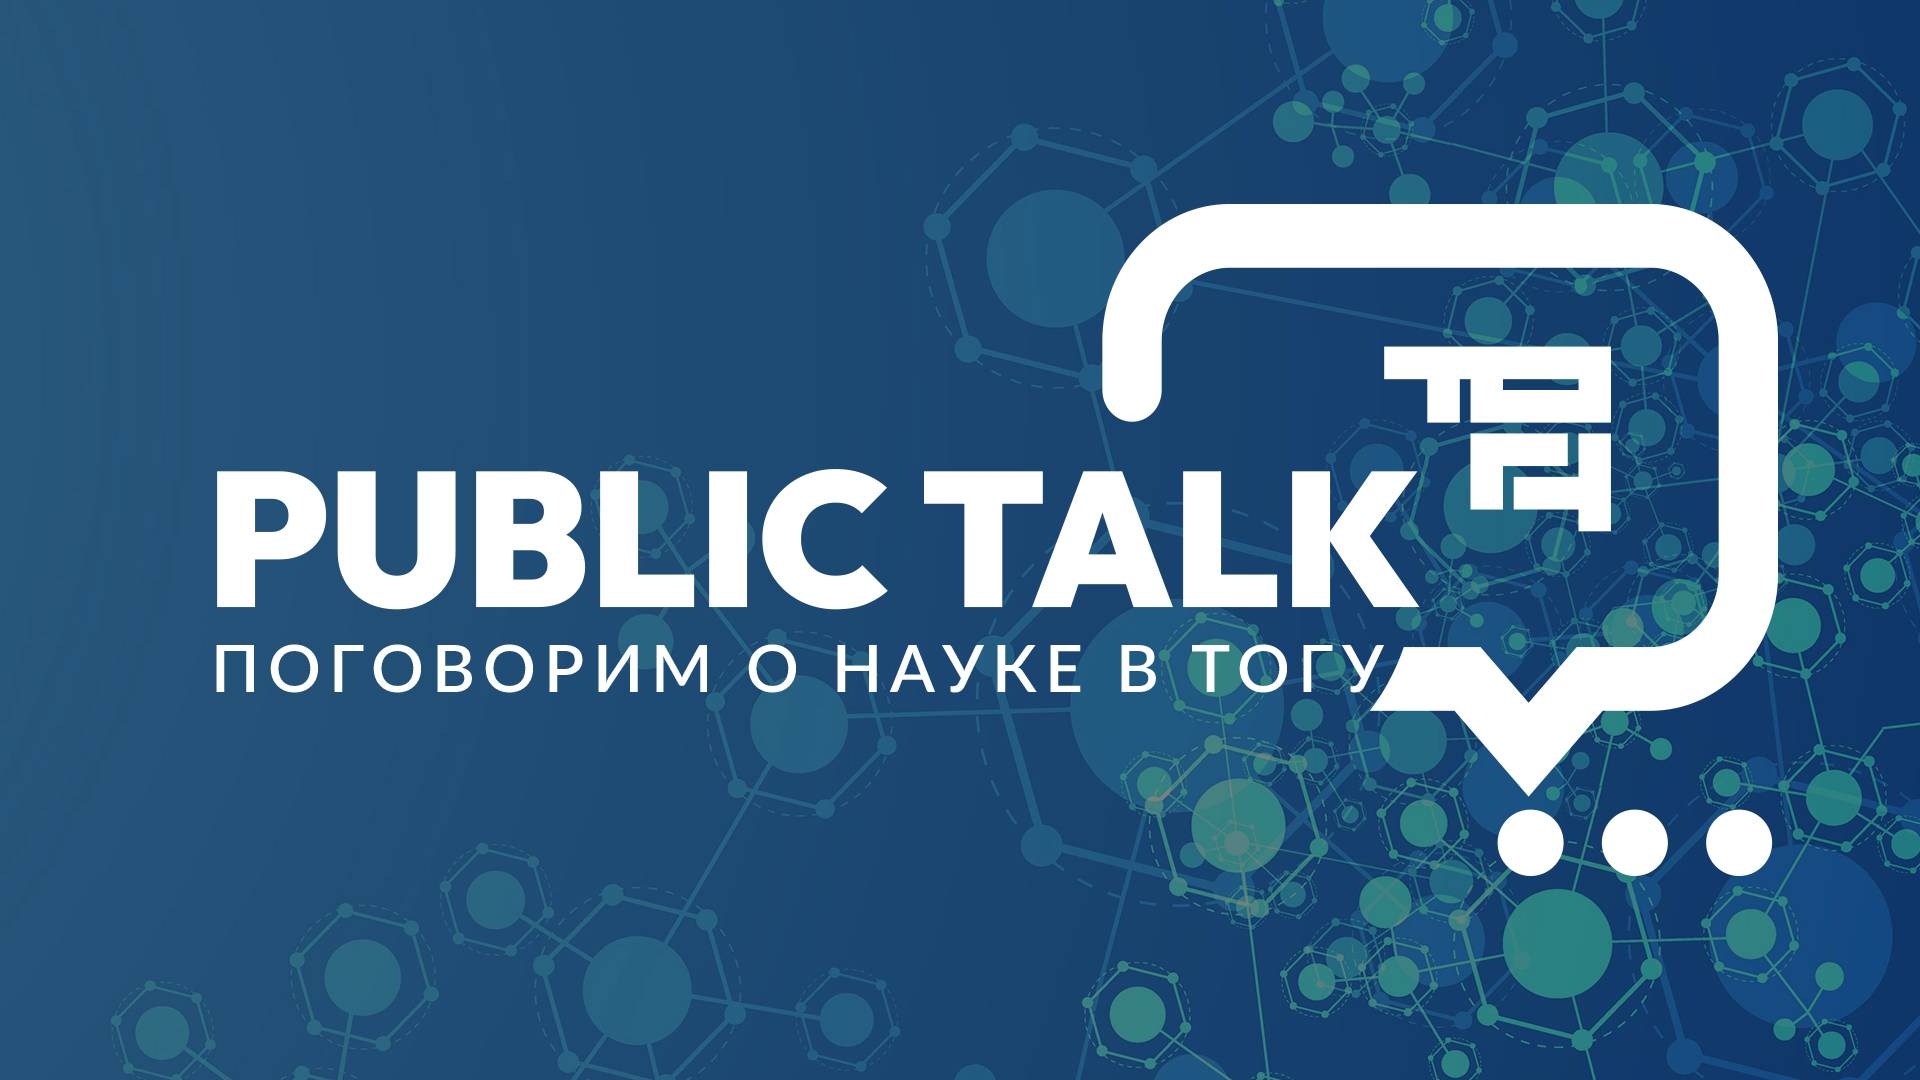 Онлайн Public talk в ТОГУ